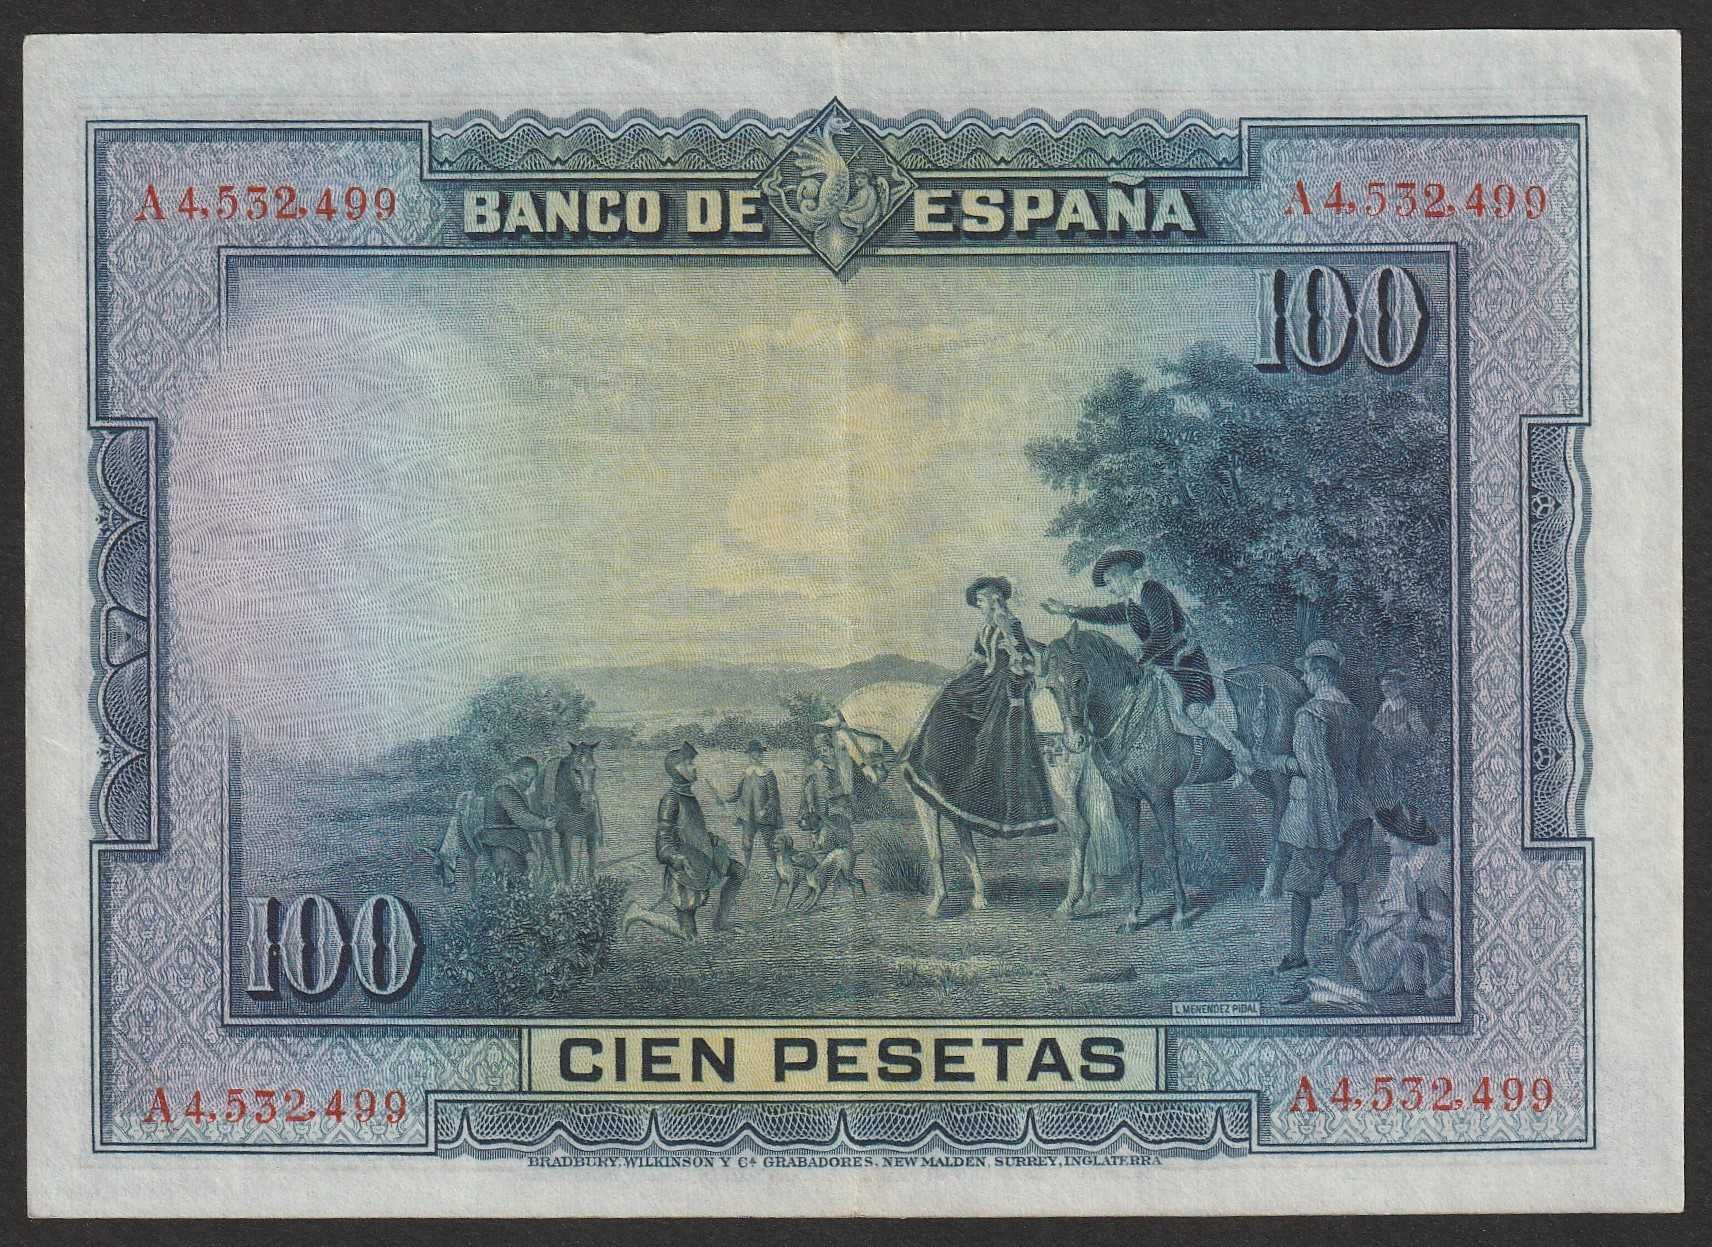 Hiszpania 100 peset 1928 - A4 - Miguel Cervantes